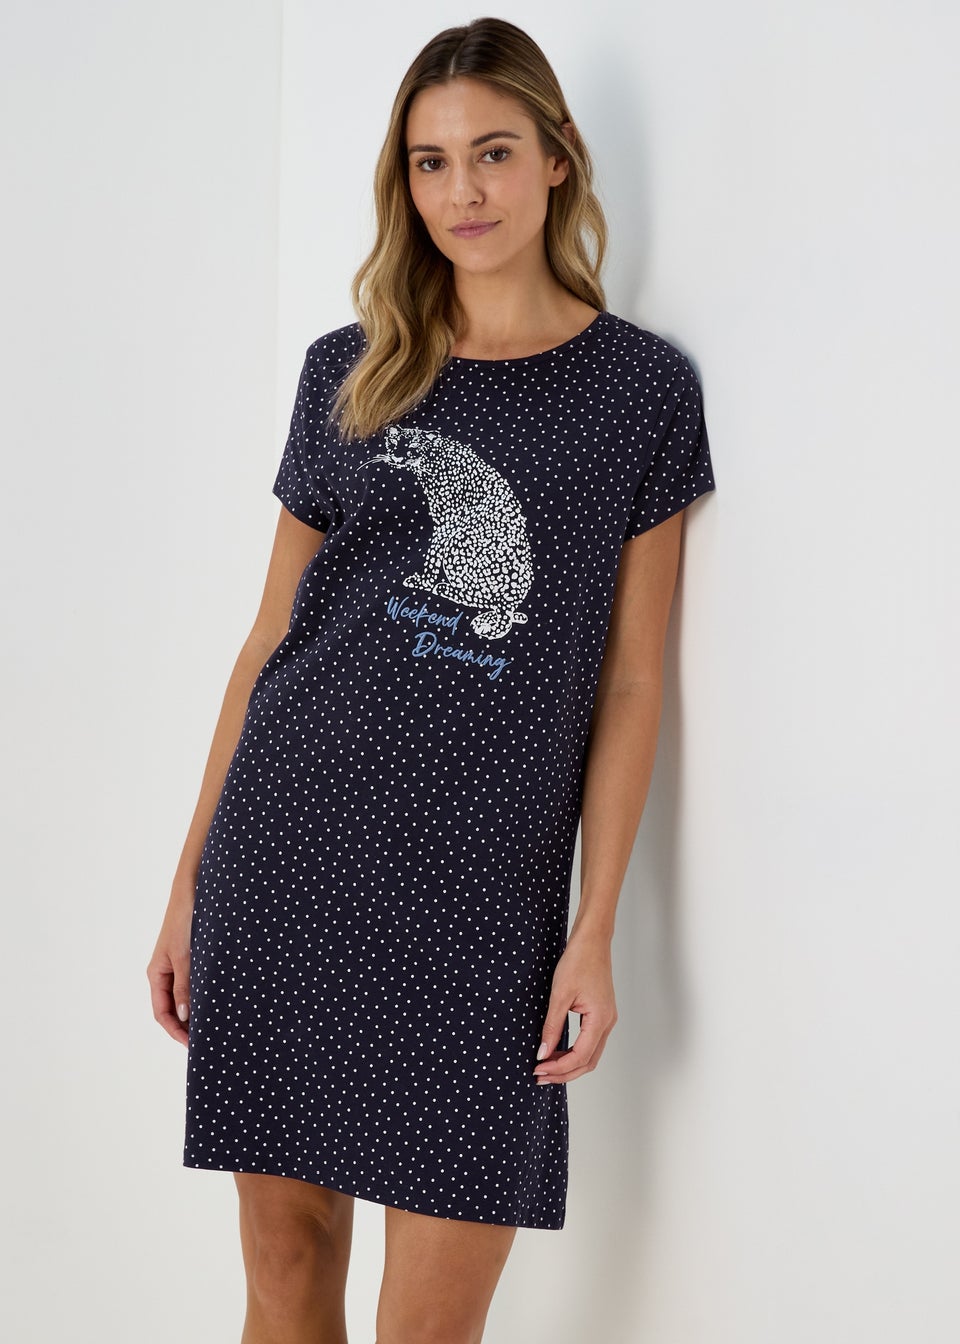 Easy DIY T-Shirt Dress Tutorial – Anita by Design